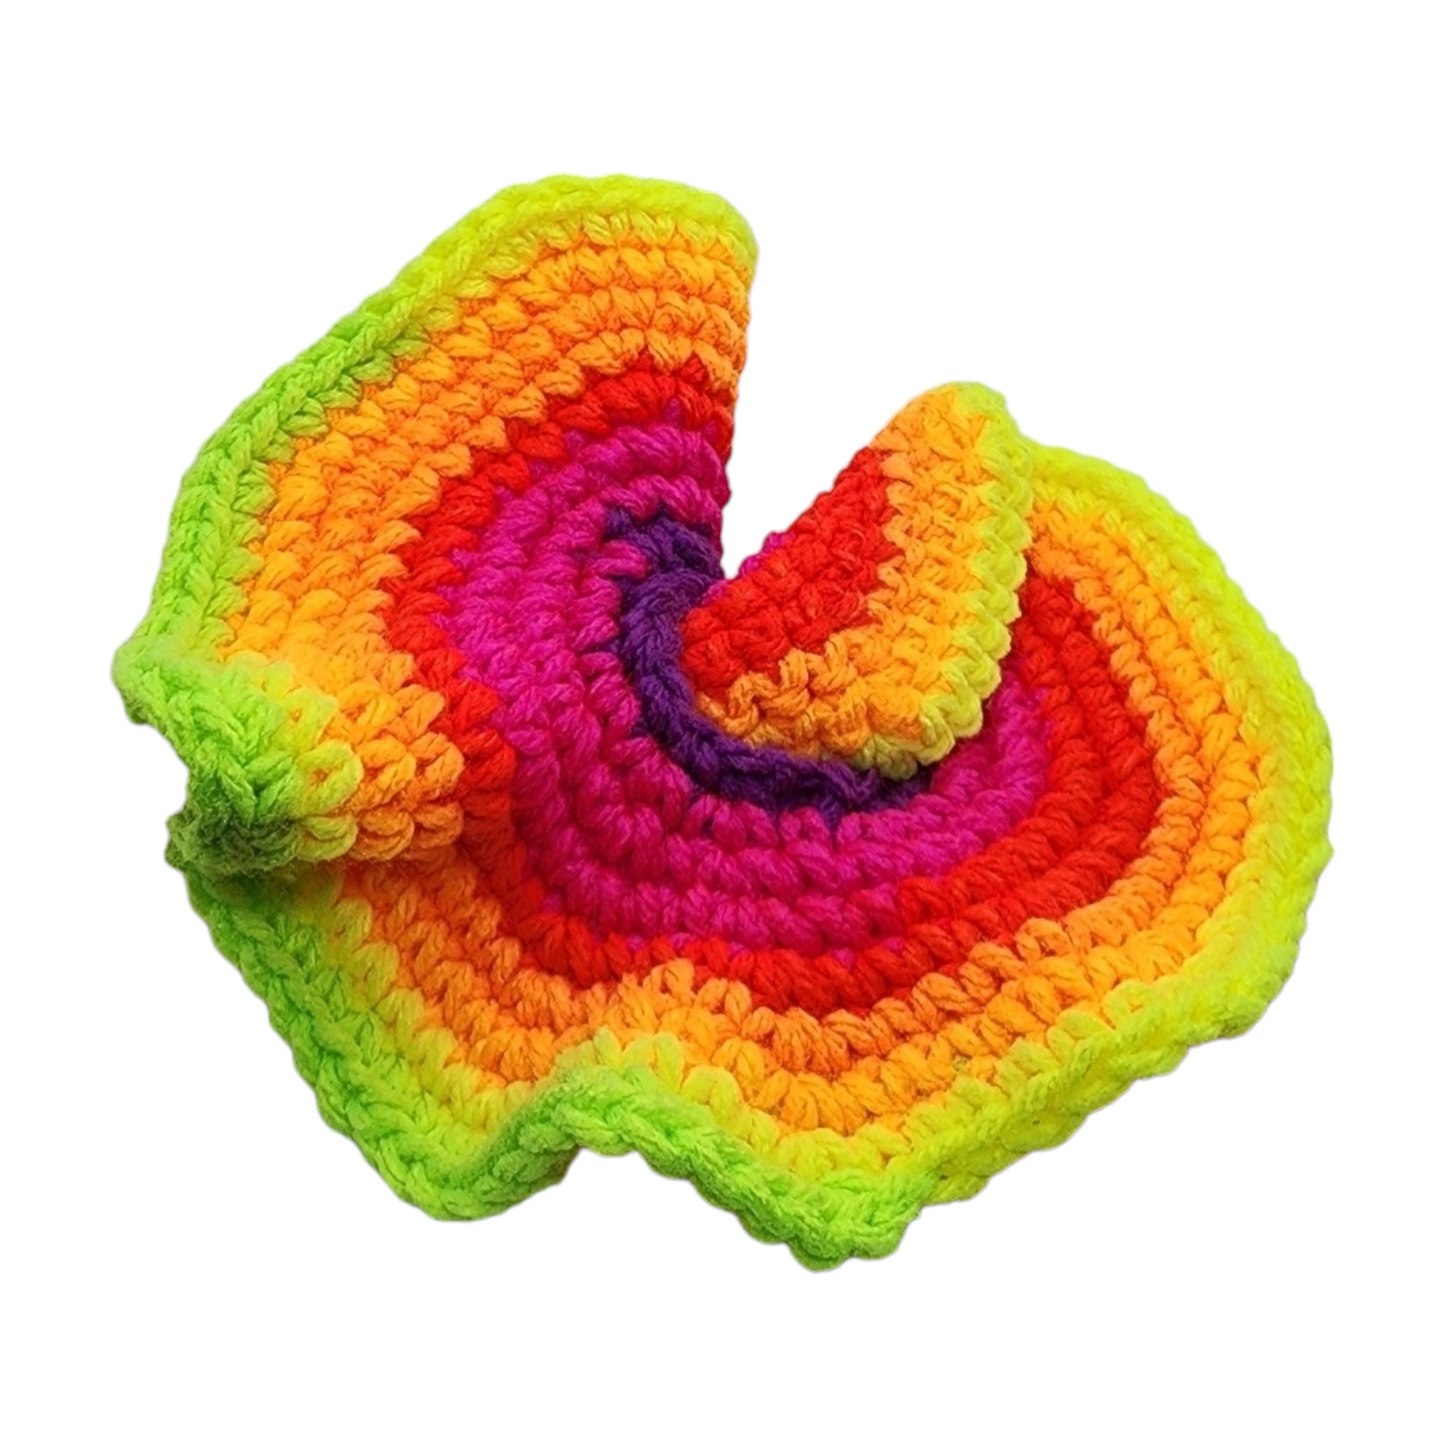 Crochet Mobius Figet Toy